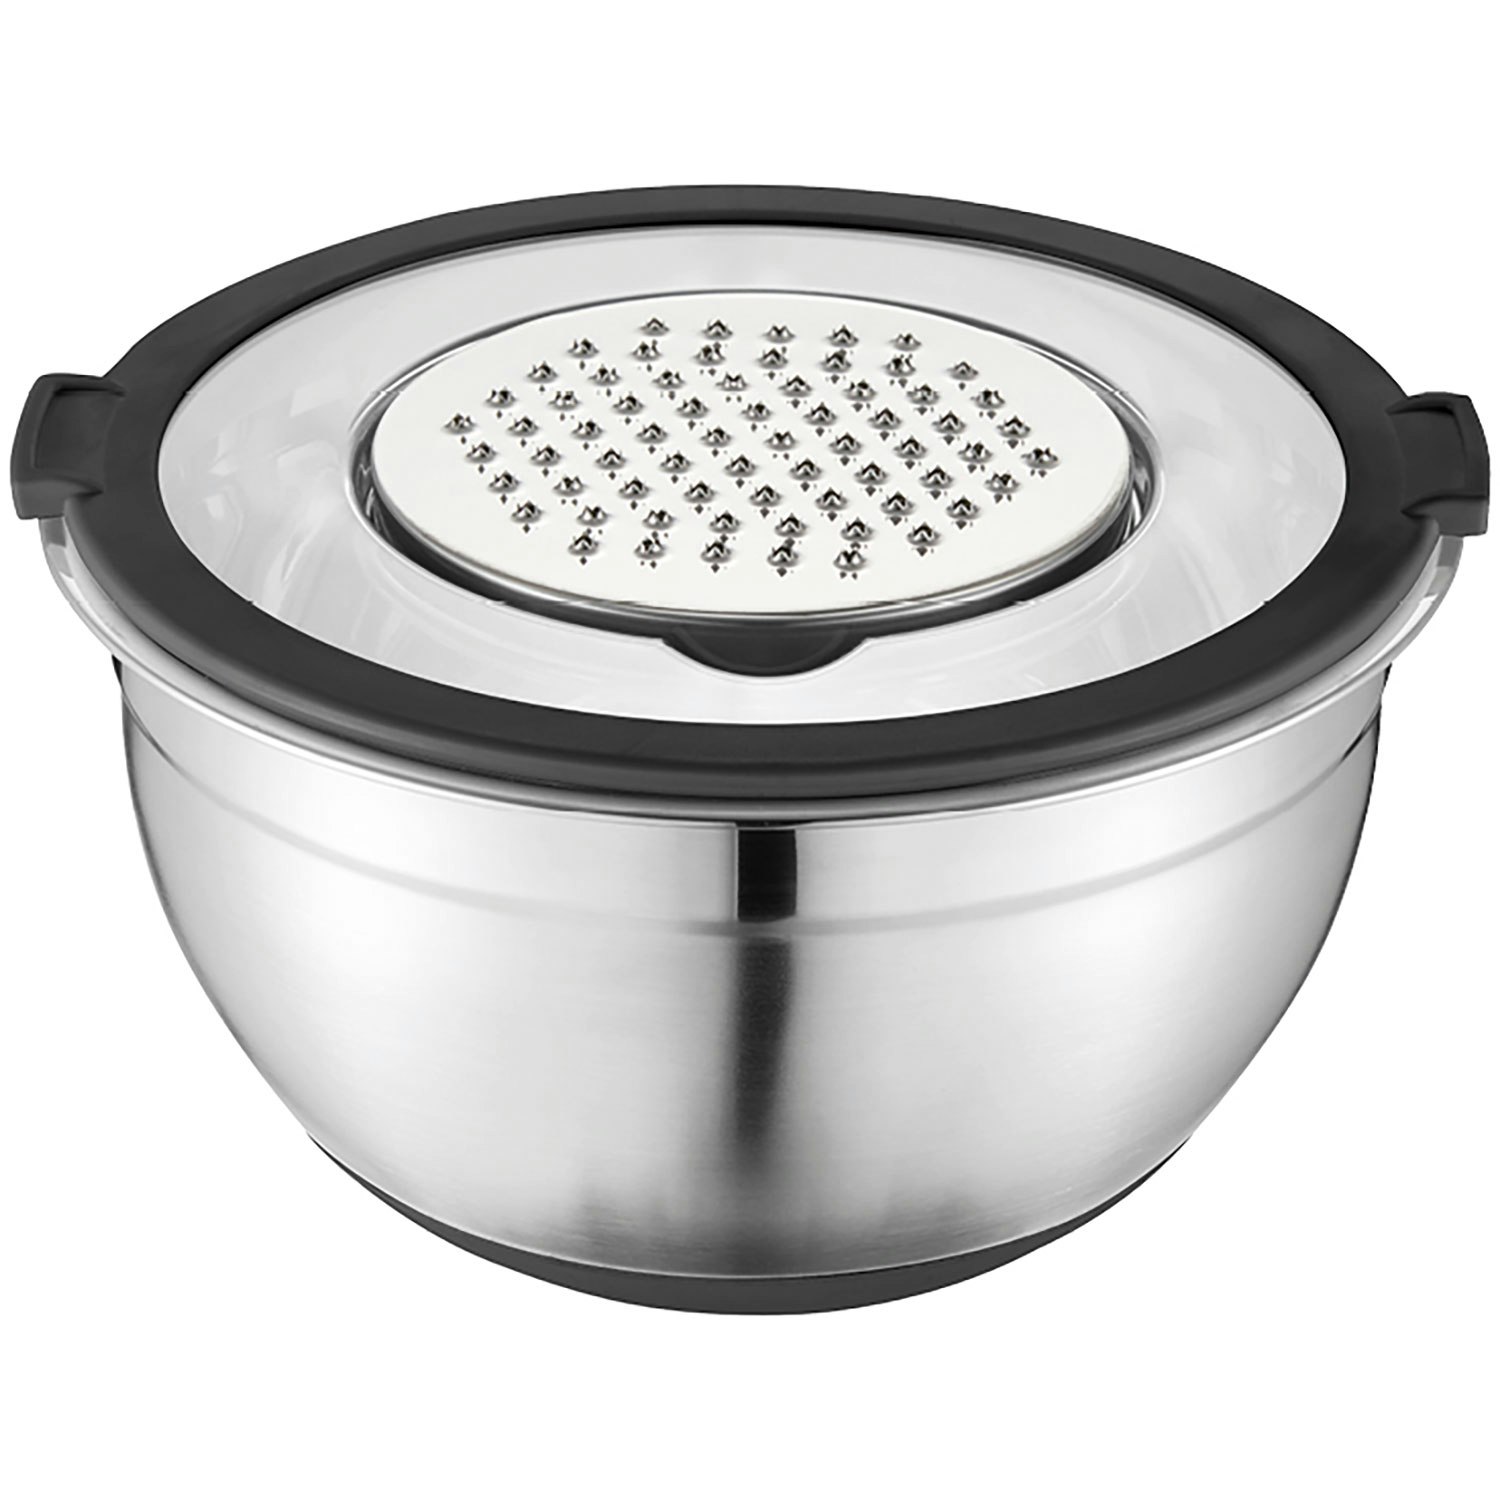 https://royaldesign.com/image/2/dorre-better-bowl-stainless-steel-w-lid-3-grater-4